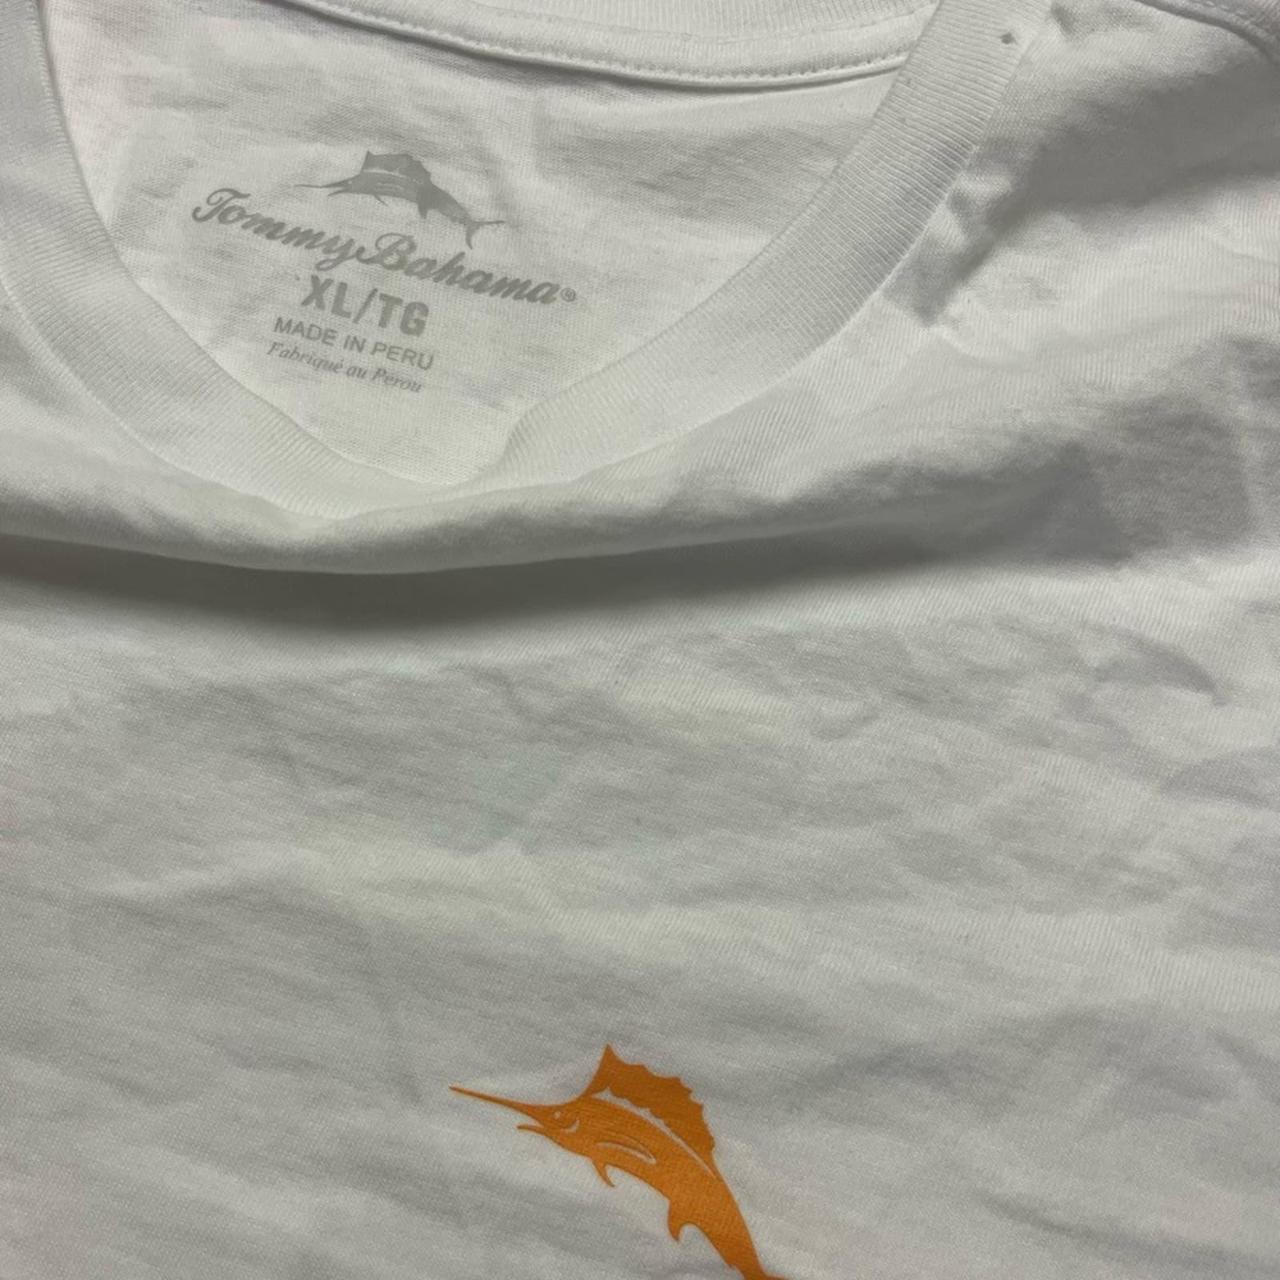 Tommy Bahama Men's Shirt - White - XL